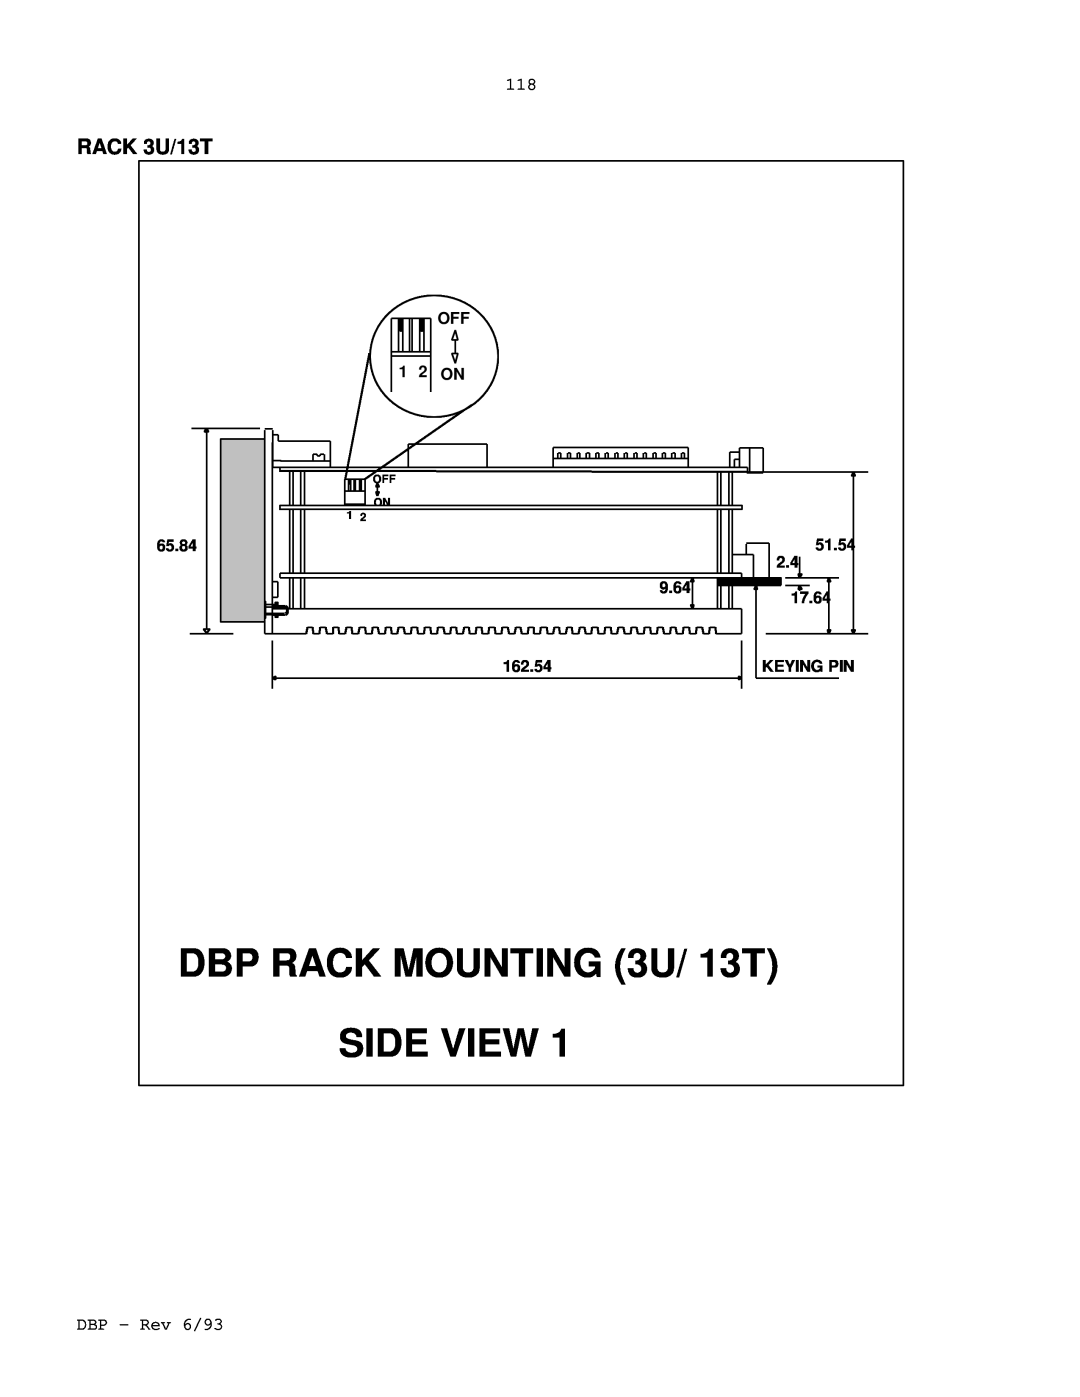 Elmo DBP SERIES manual DBP RACK MOUNTING 3U/ 13T, Side View, RACK 3U/13T, 65.84, 51.54, 9.64, 17.64, 162.54, Keying Pin 